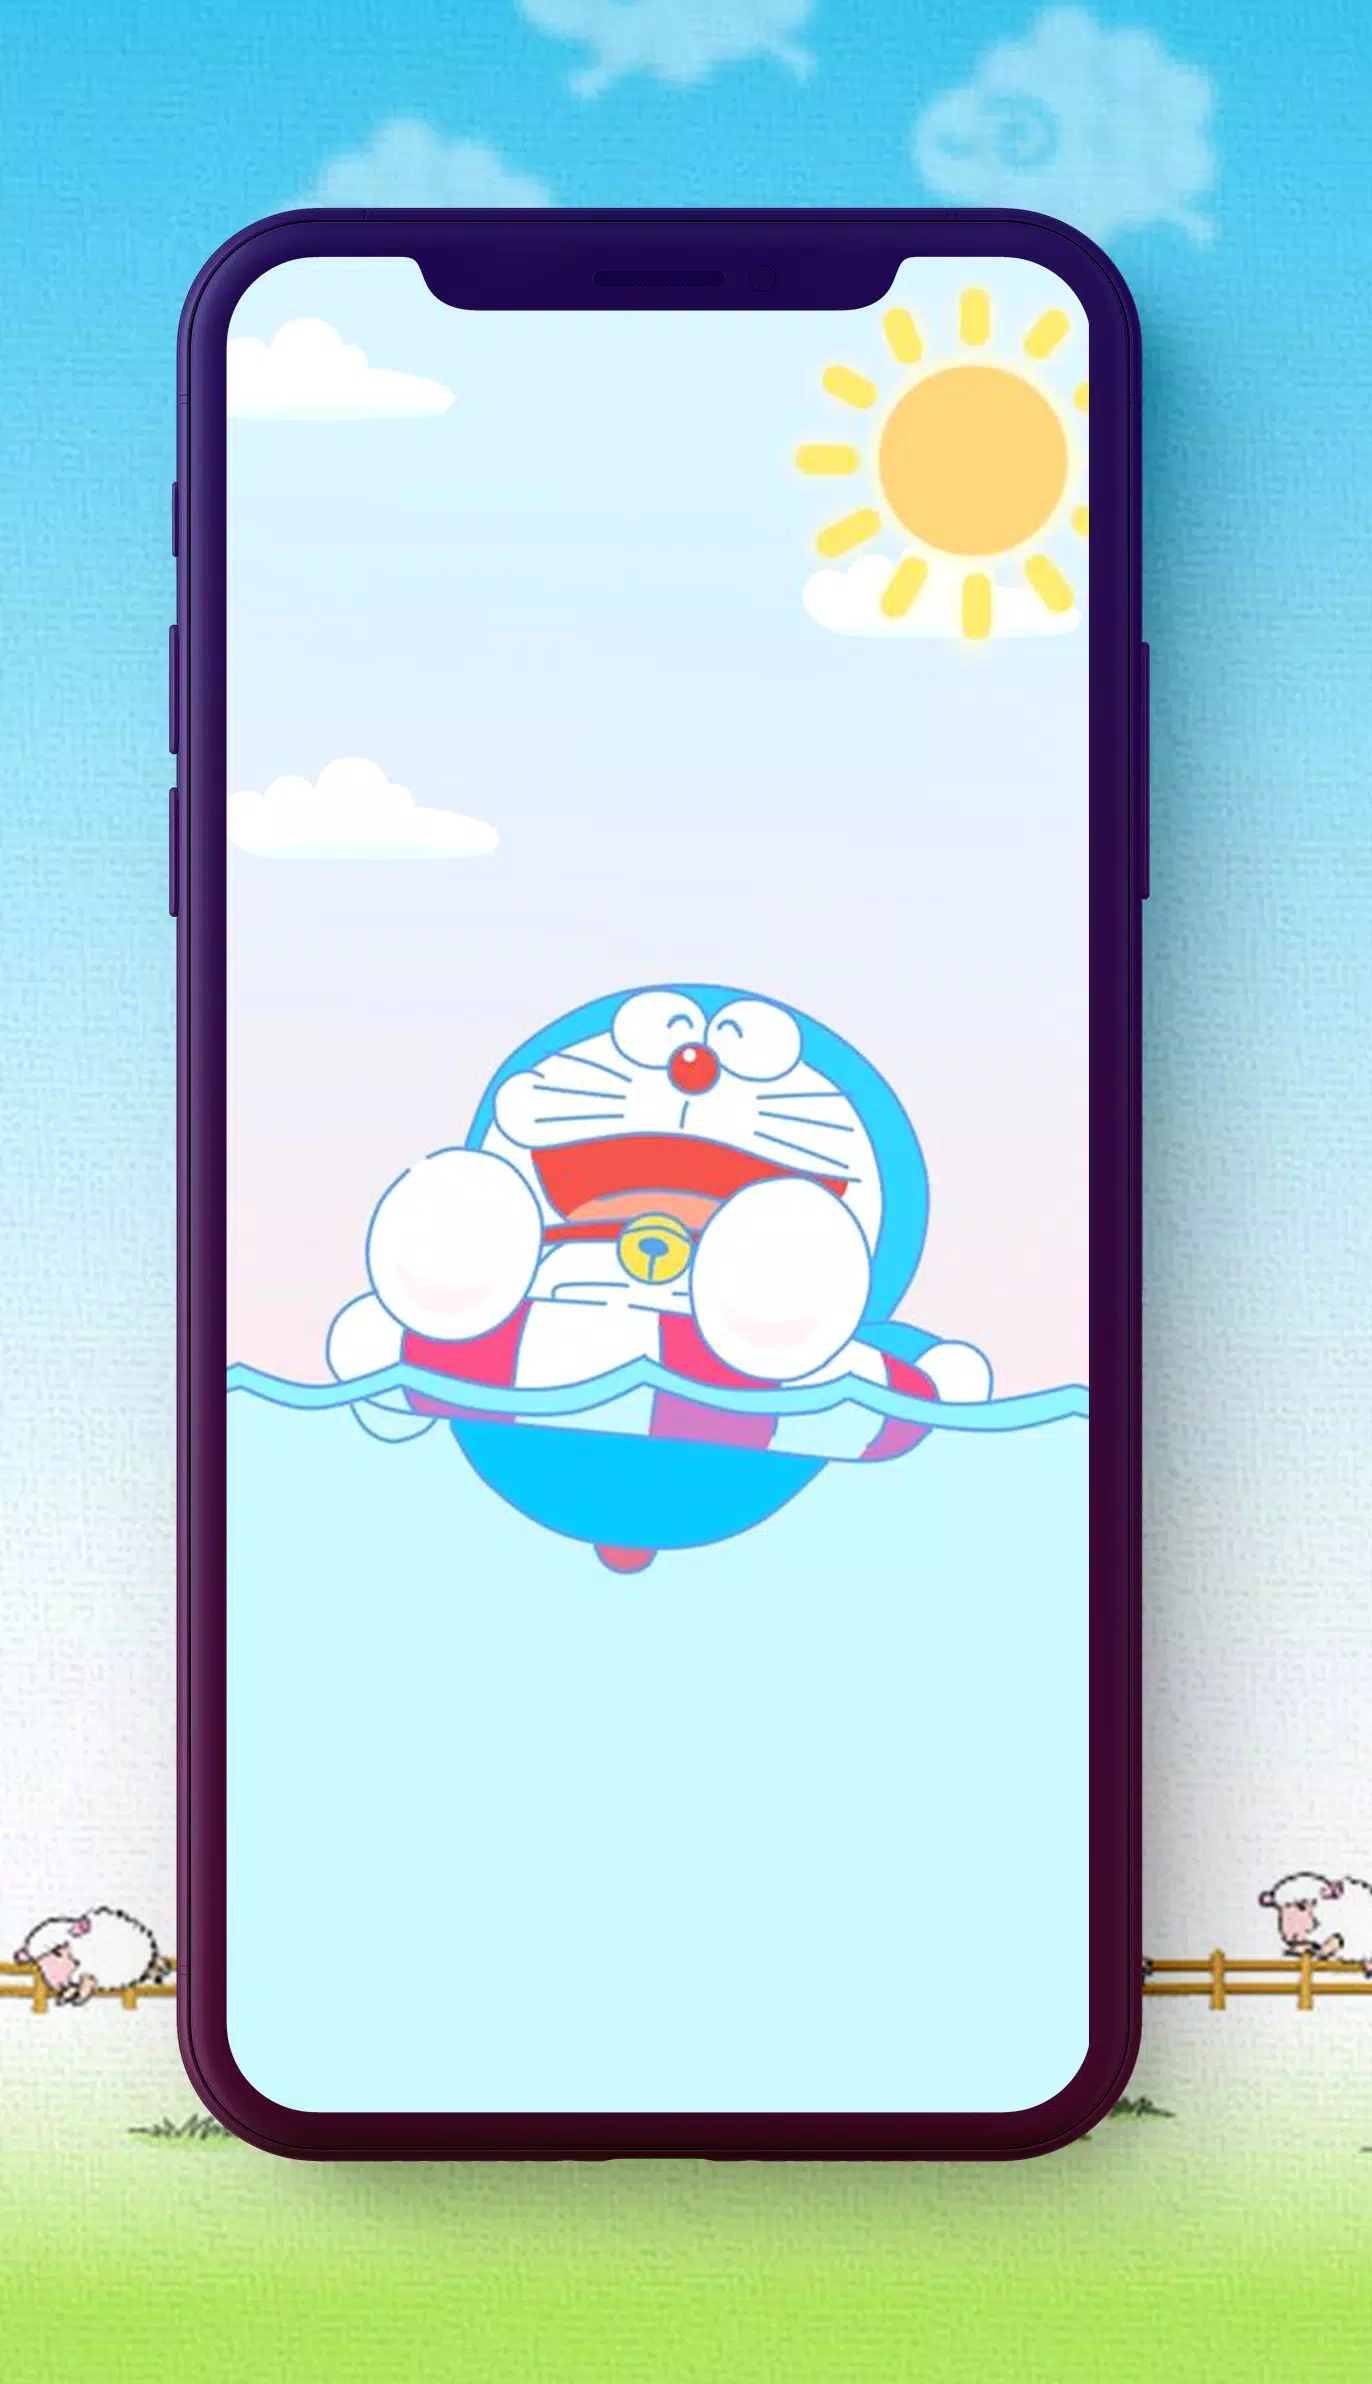 Doraemon Wallpaper Apk For Android Download